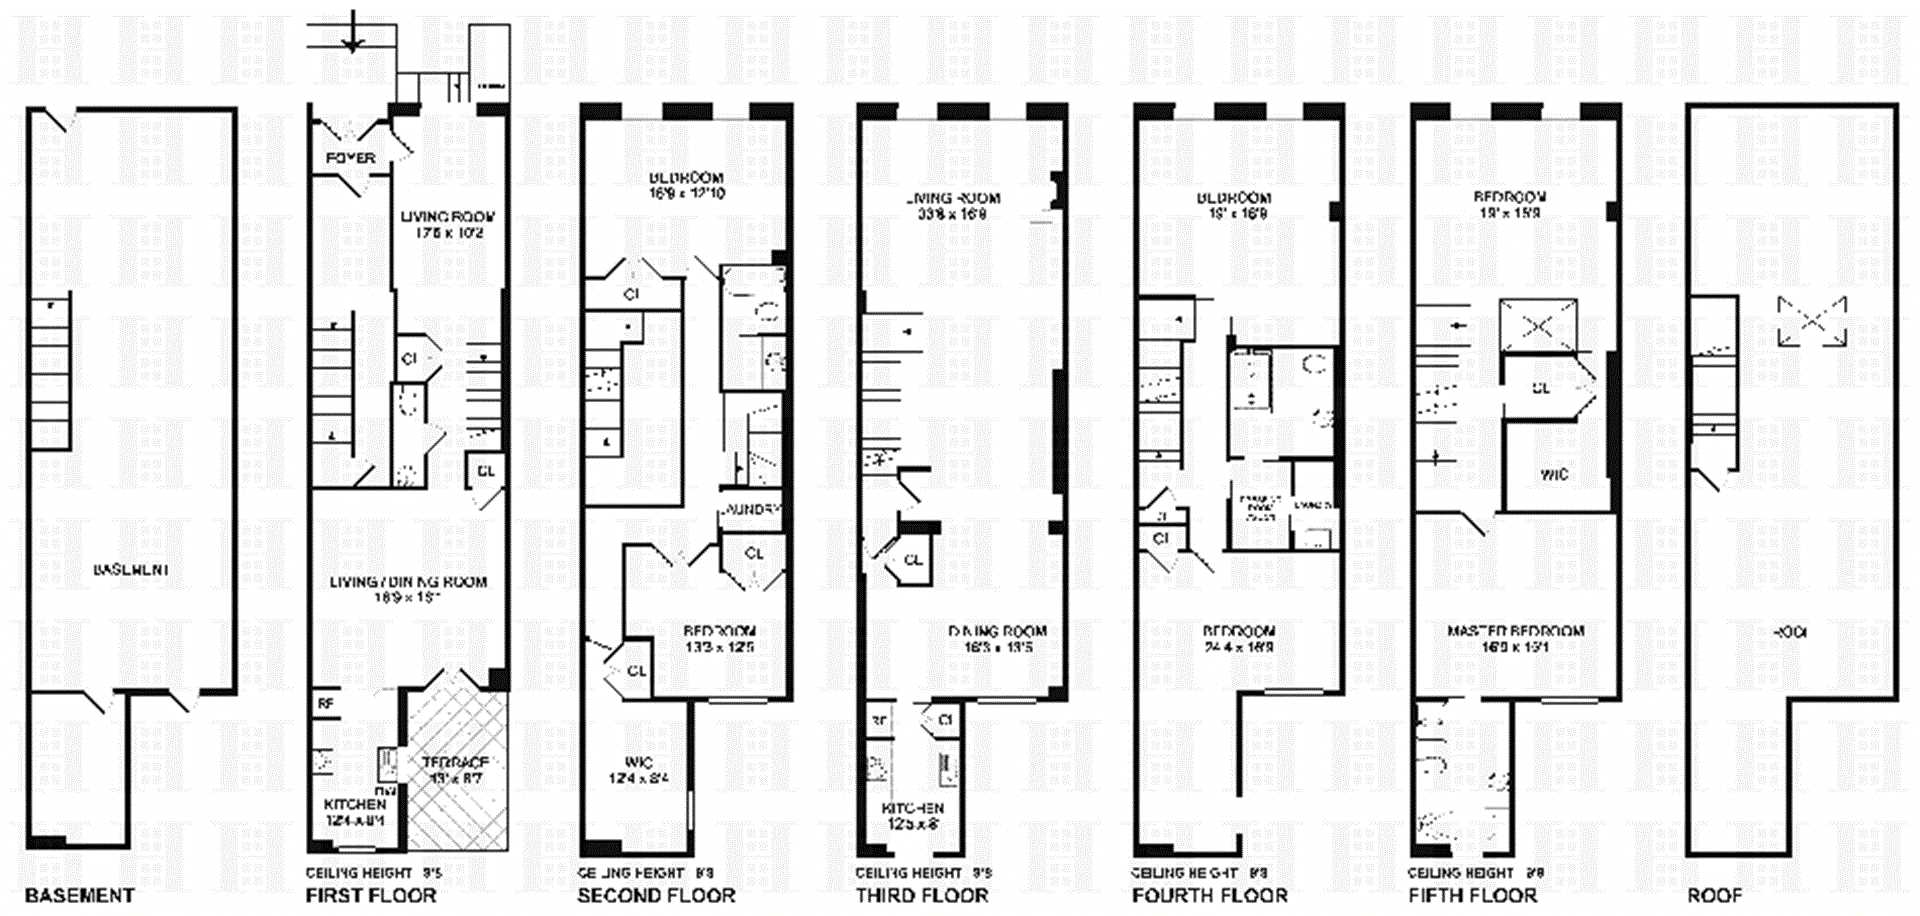 Floorplan for 259 West 137th Street